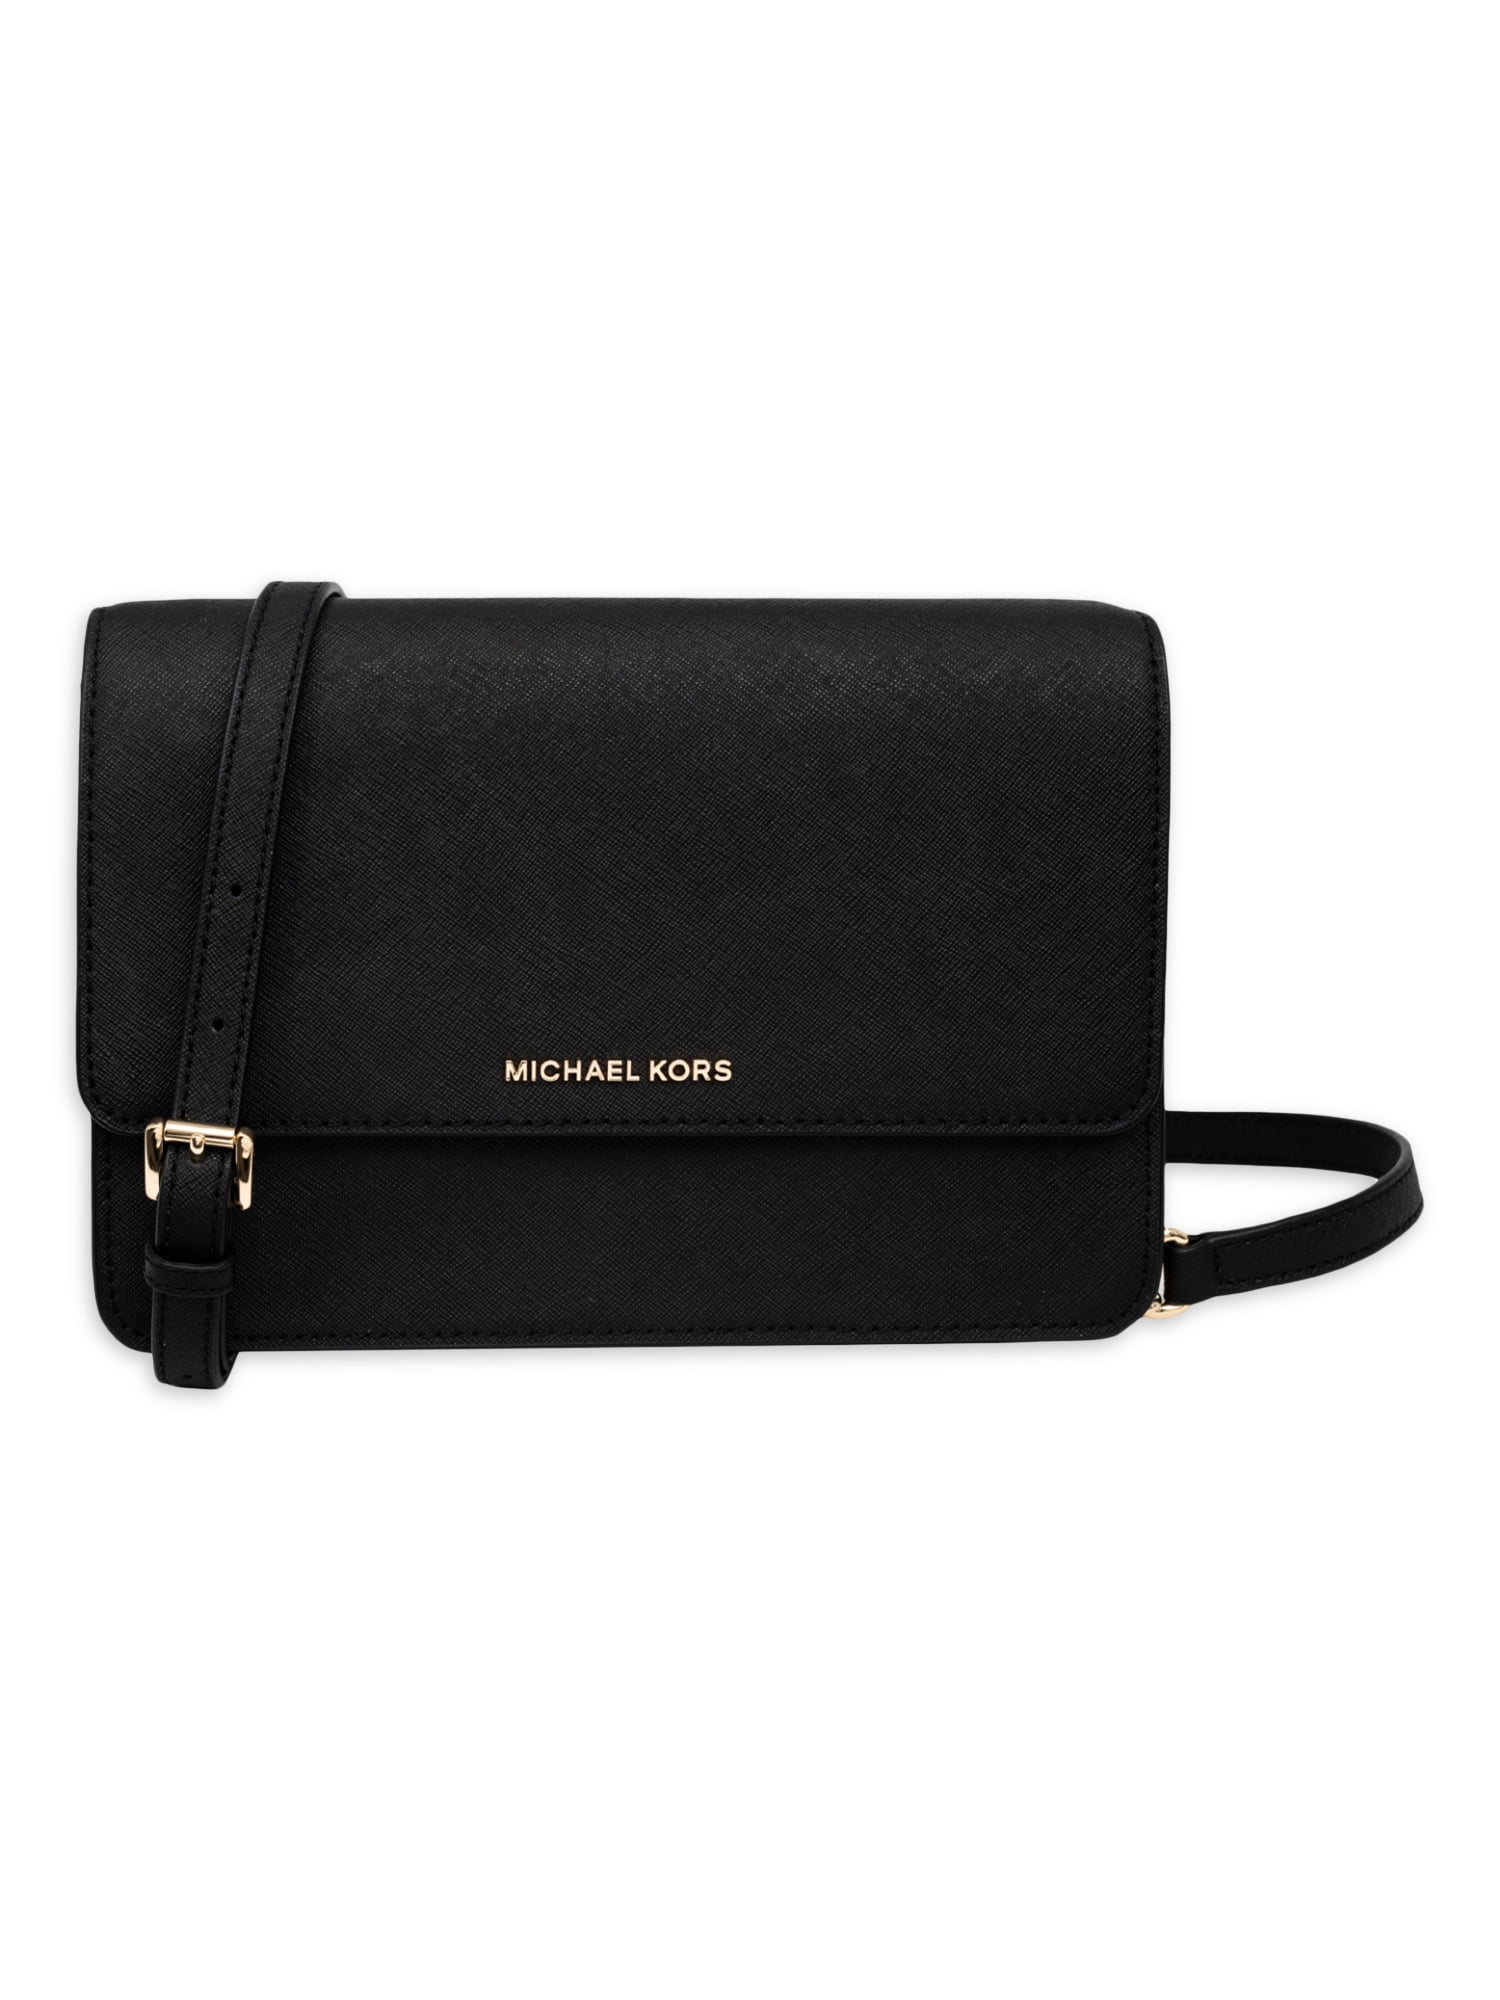 Michael Kors Women's Daniela Large Saffiano Leather Crossbody Bag - Black -  